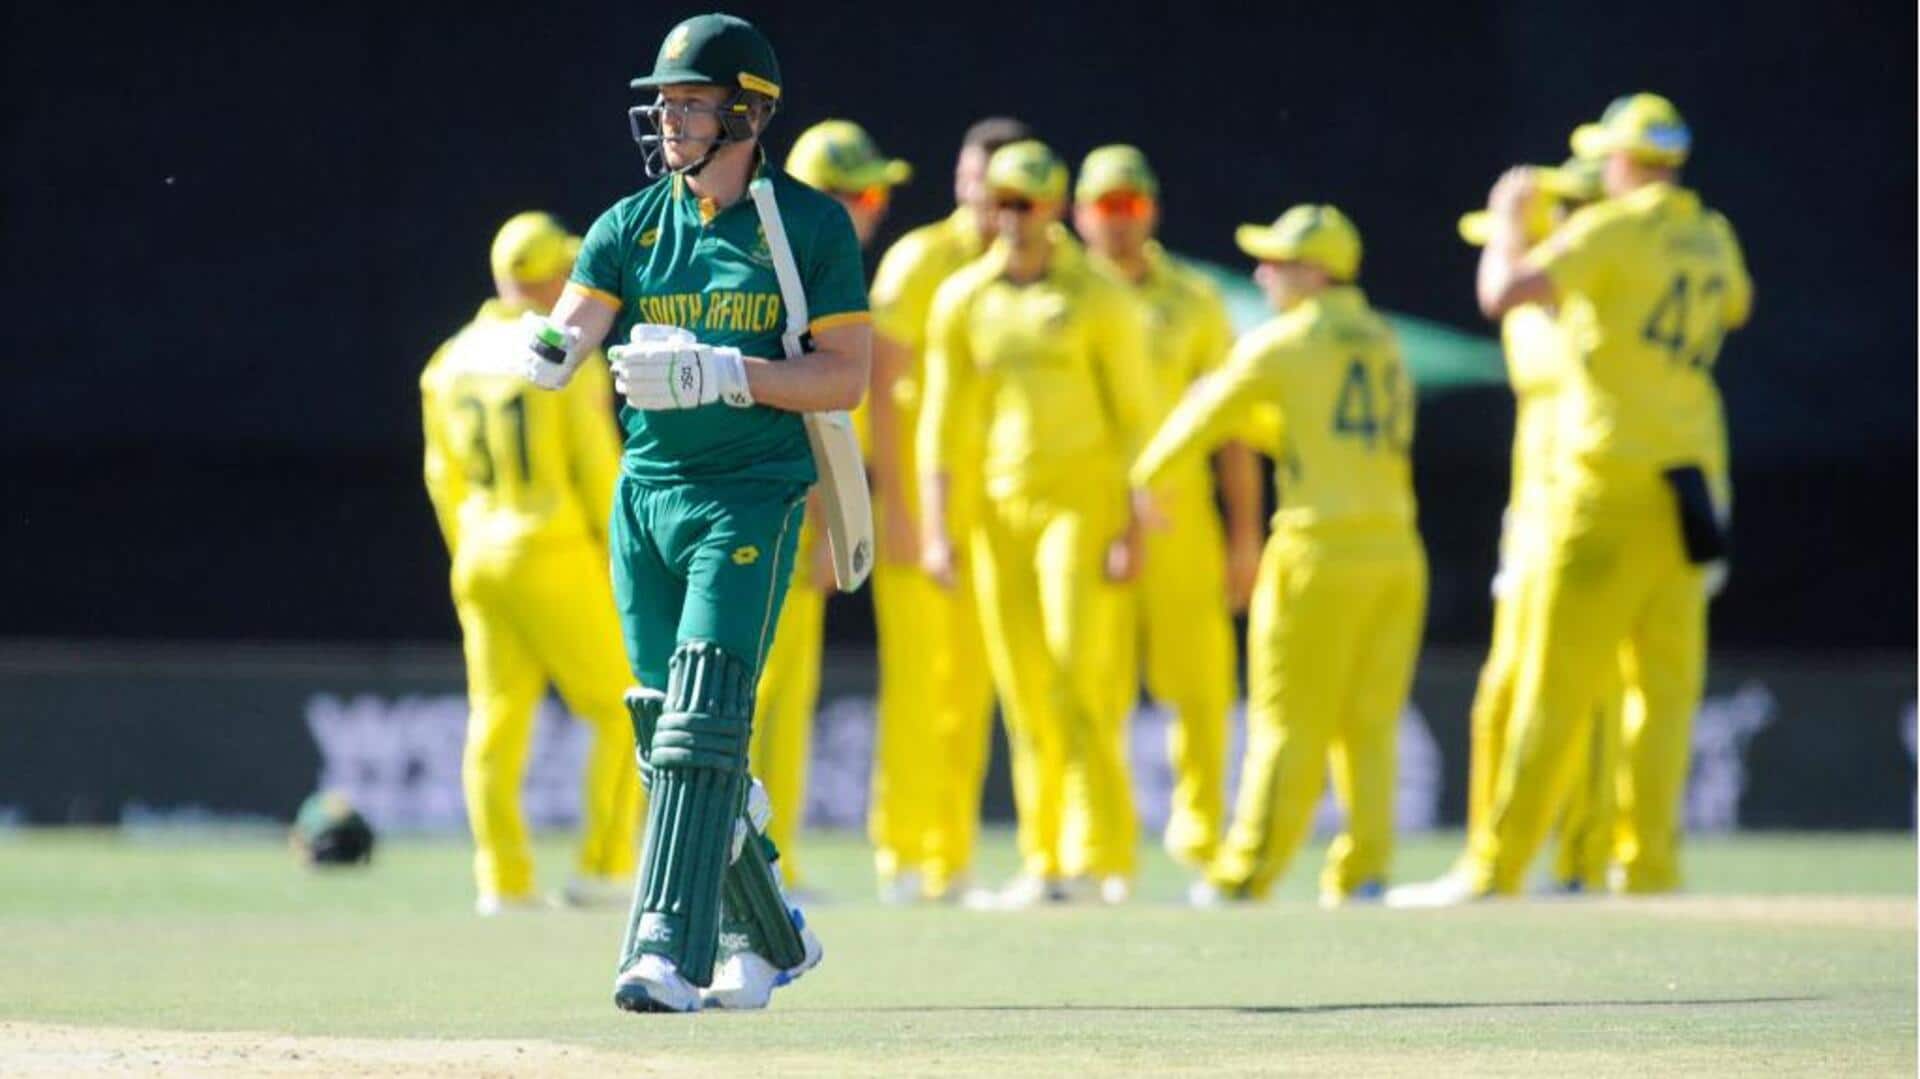 SA vs AUS, 2nd ODI: Gutted hosts seek redemption